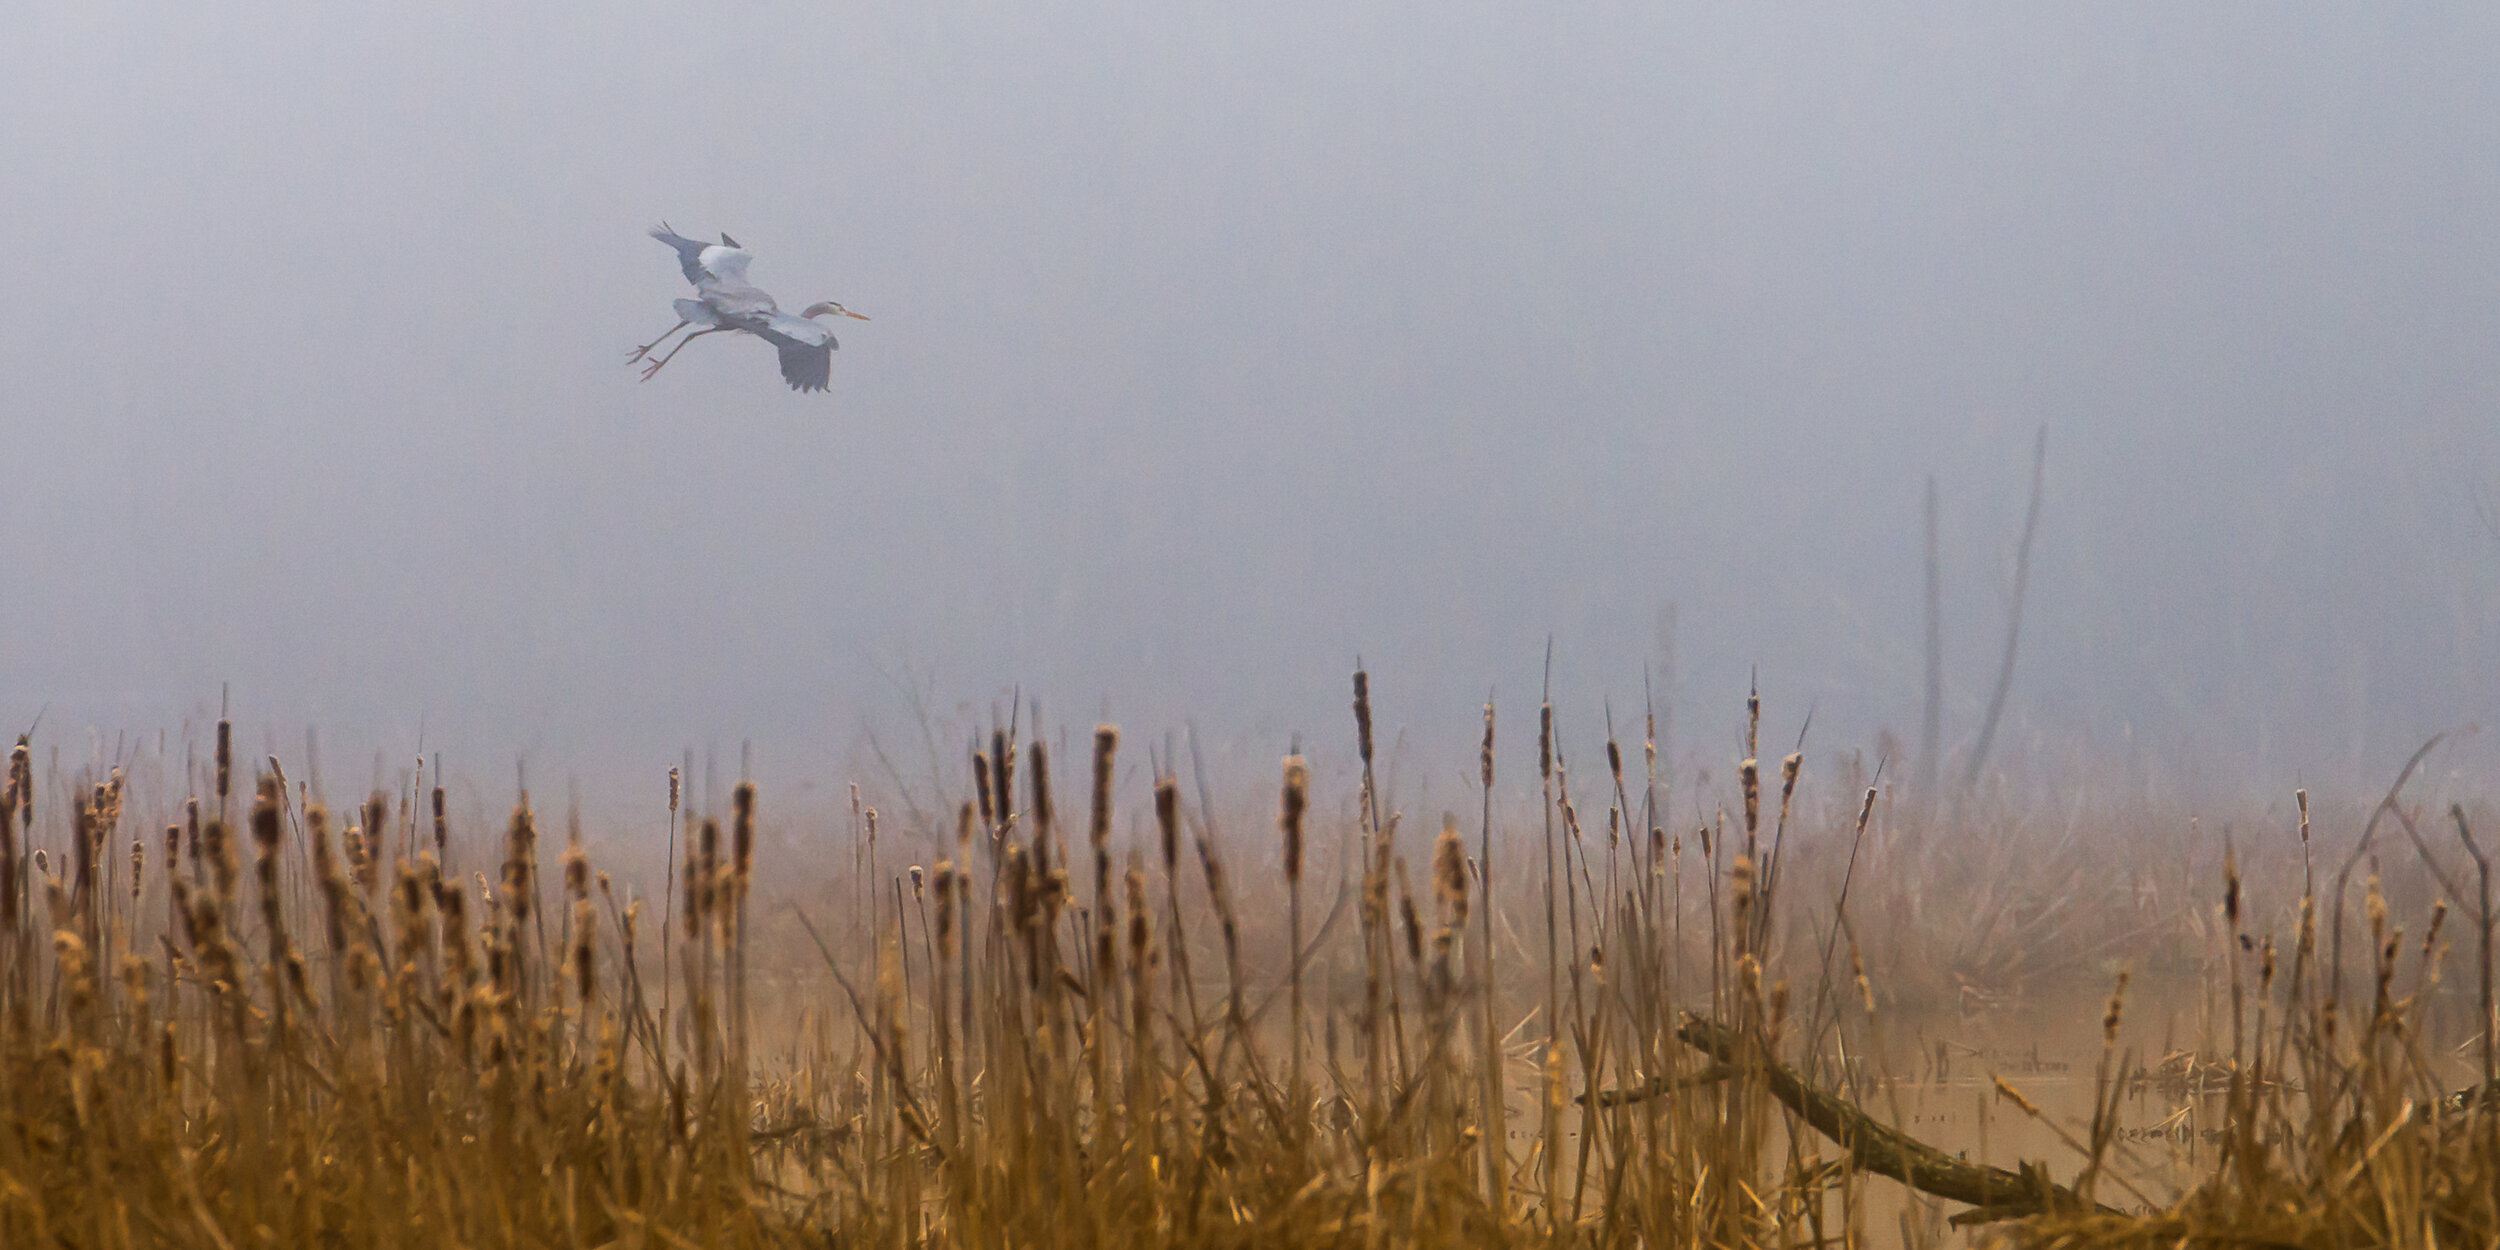 heron flies through fog over beaver pond